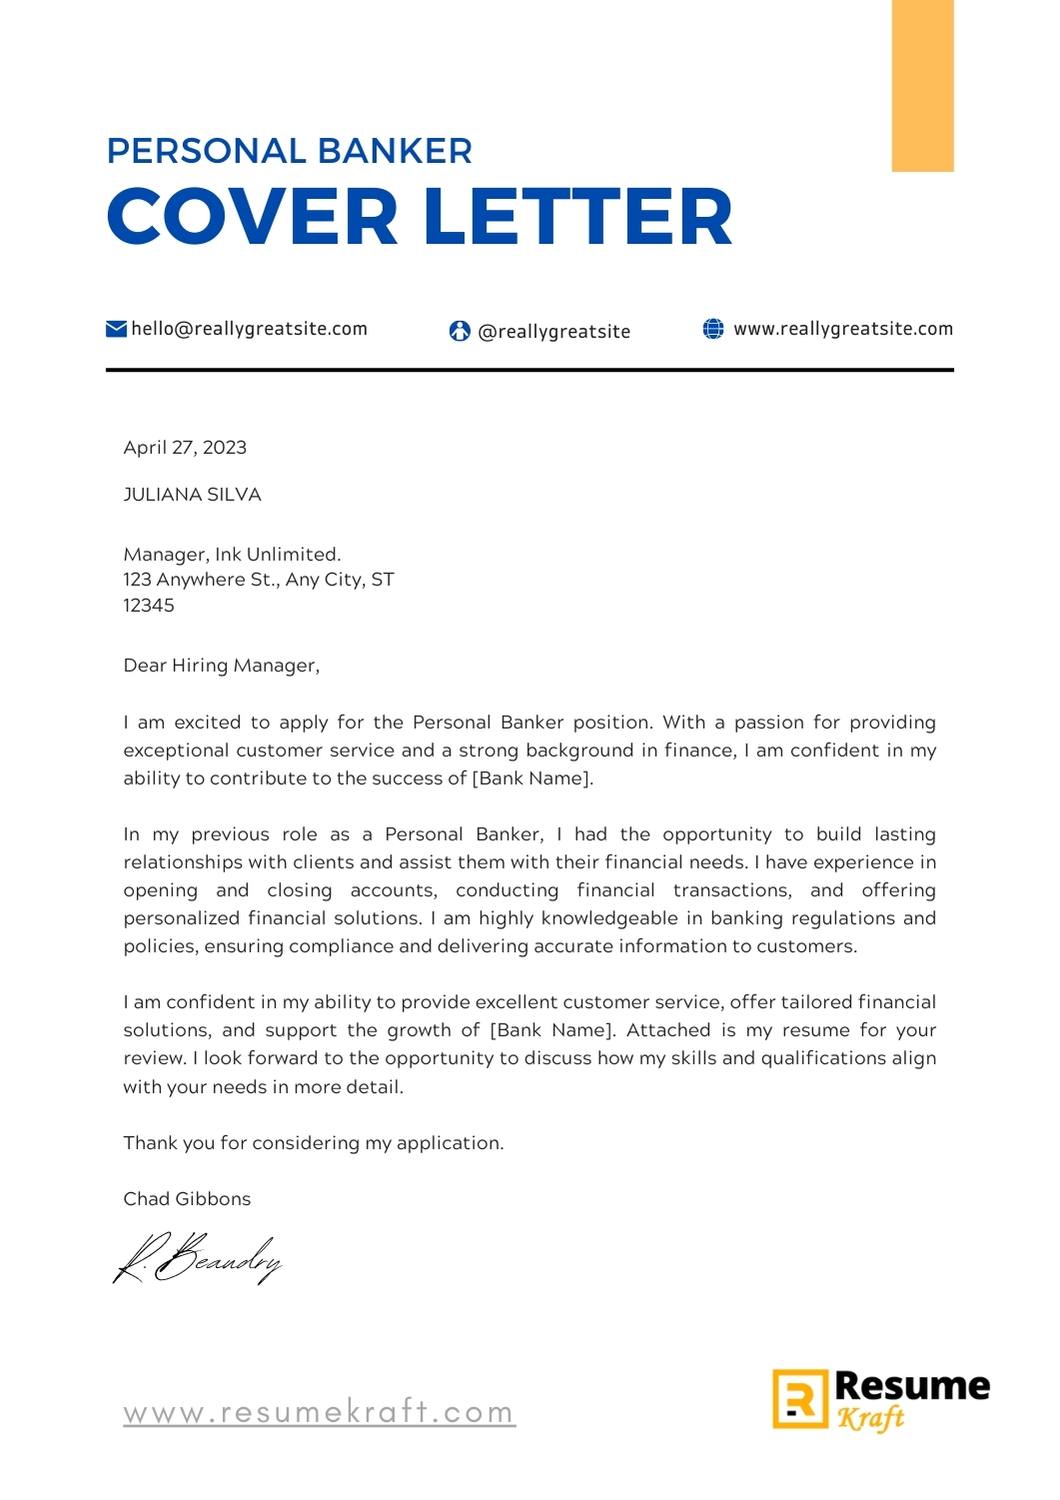 resume cover letters for banker